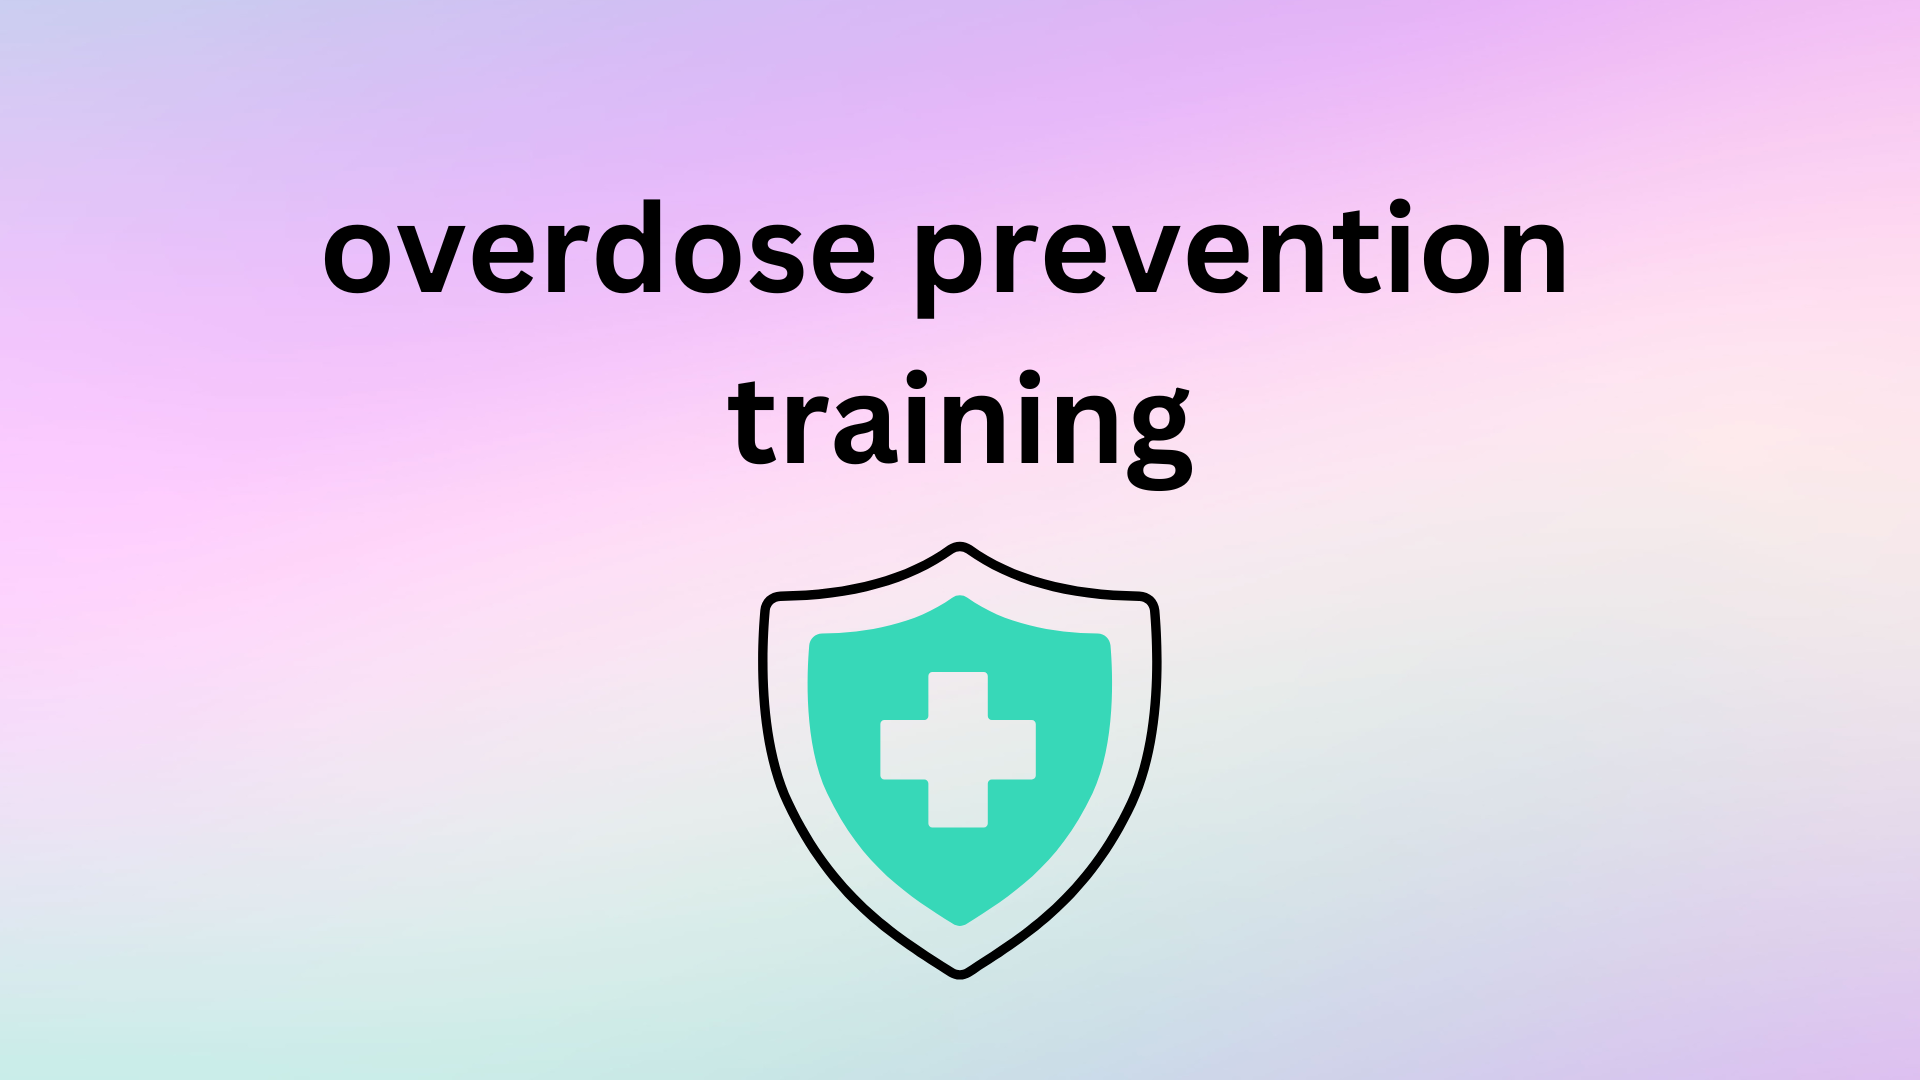 Overdose prevention training, allcove beach cities